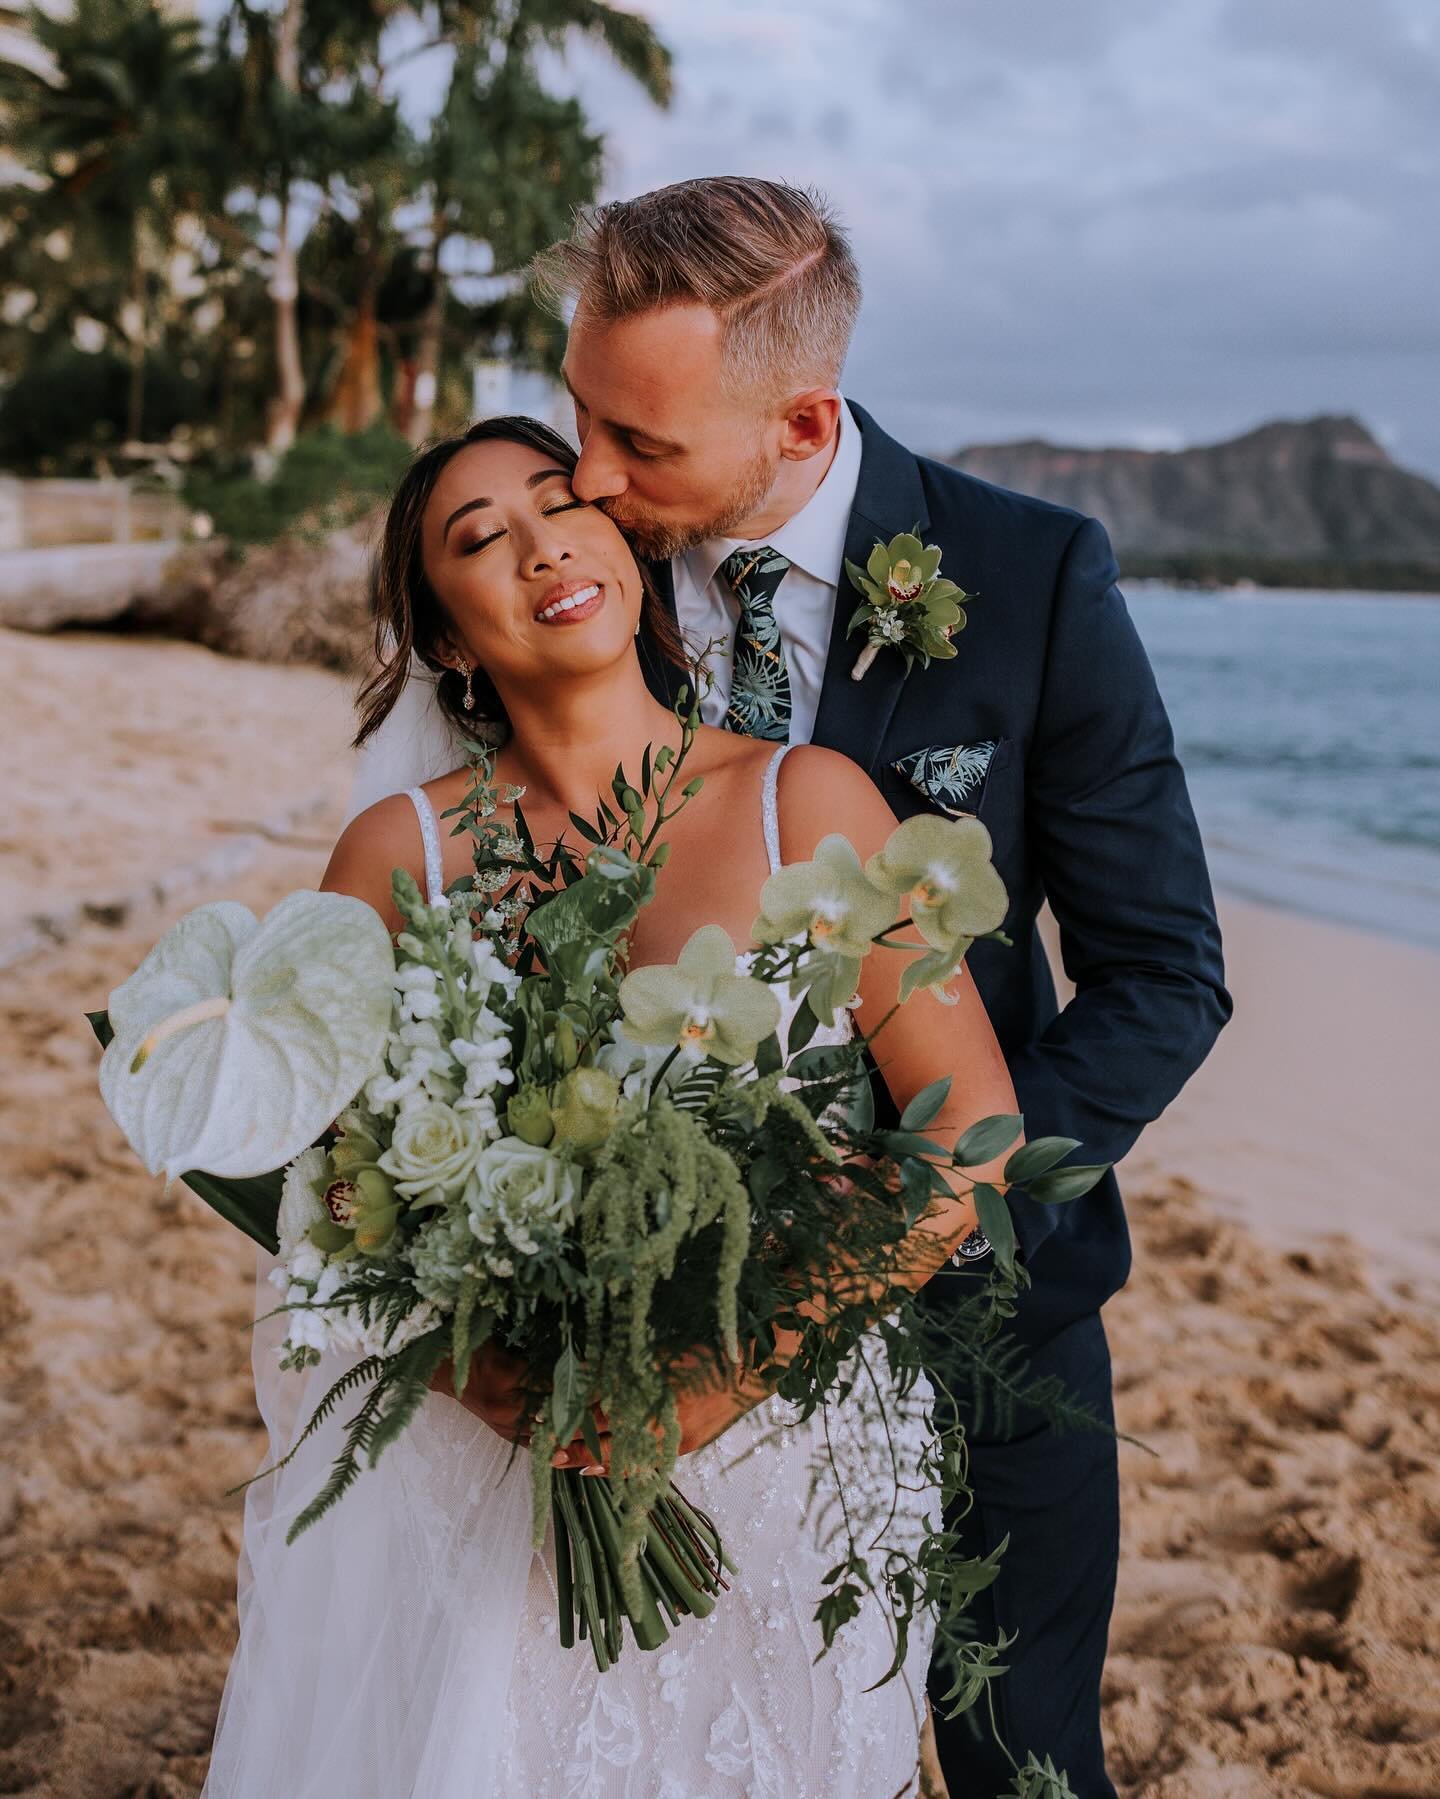 These two 😍😍😍 Absolutely stunning. 

Photographer: @mdee_photo
Planner: @oneandonlyhawaii 

#weddingflorist #weddingflowers #tropicalwedding #hawaiiwedding #oahuwedding #honoluluwedding #oahuflorist #honoluluflorist #waikikiwedding #weddingbouquet